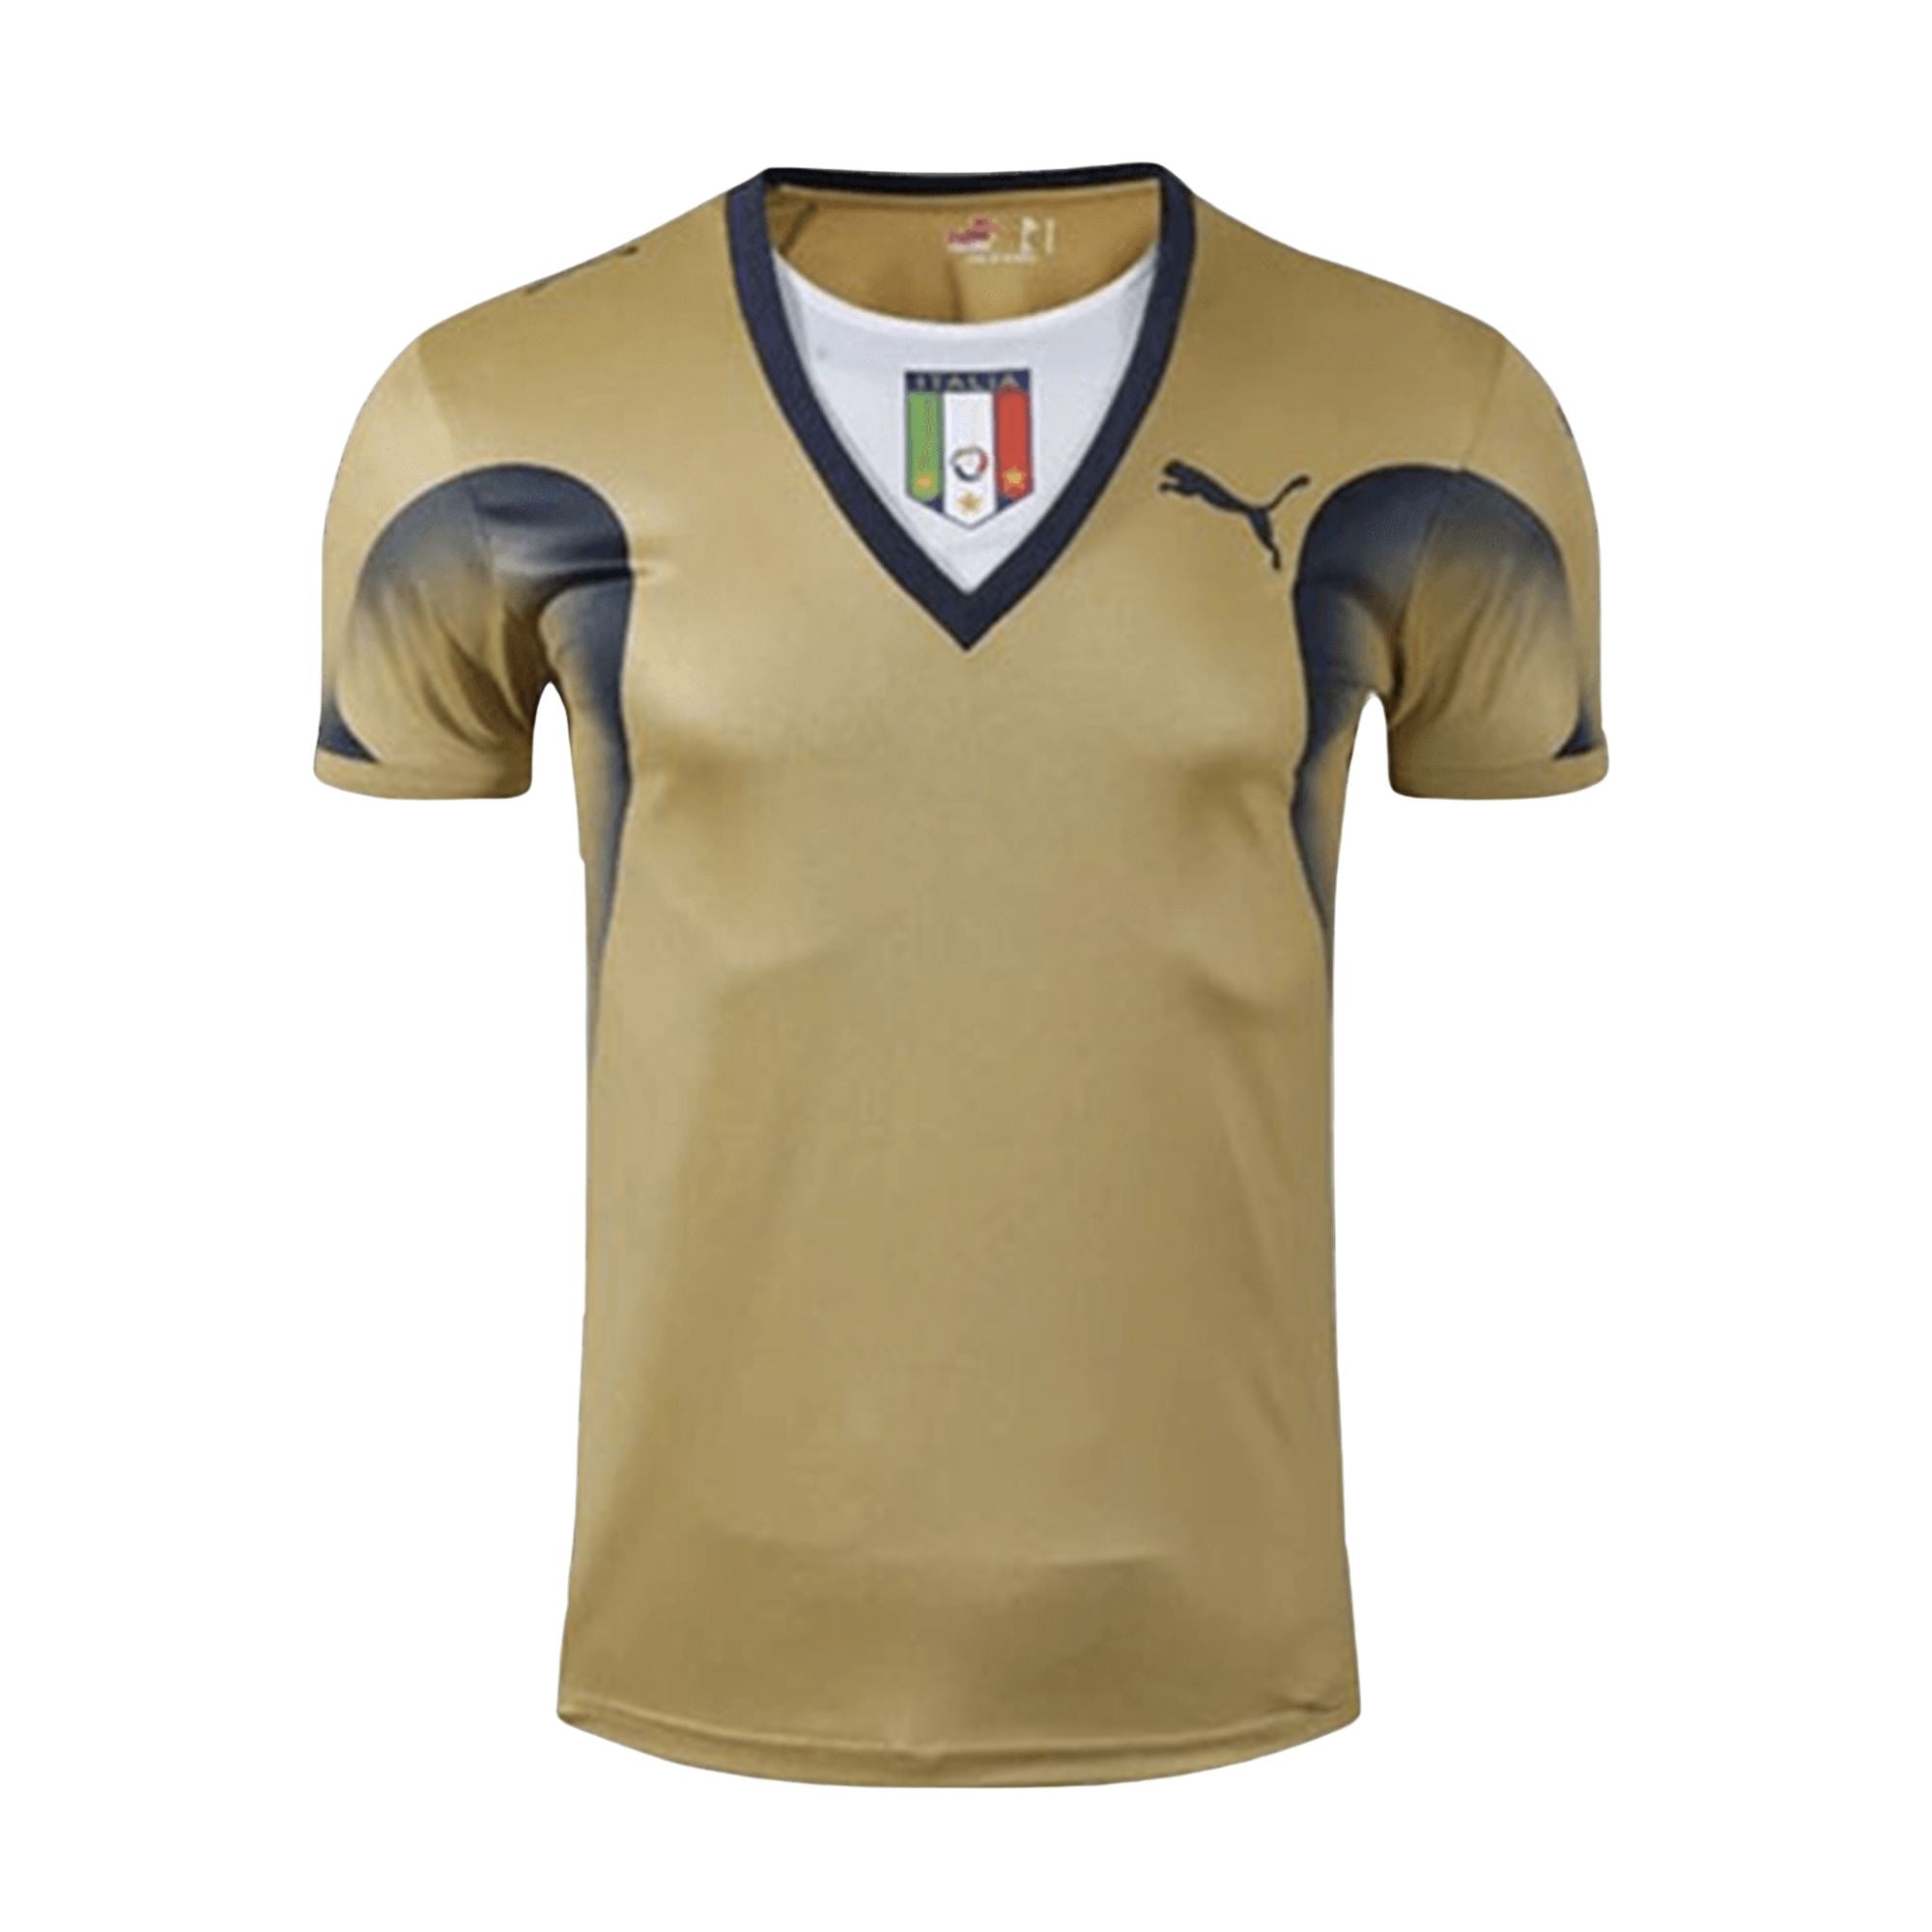 2006 Italy World Cup Goalkeeper Jersey - ITASPORT